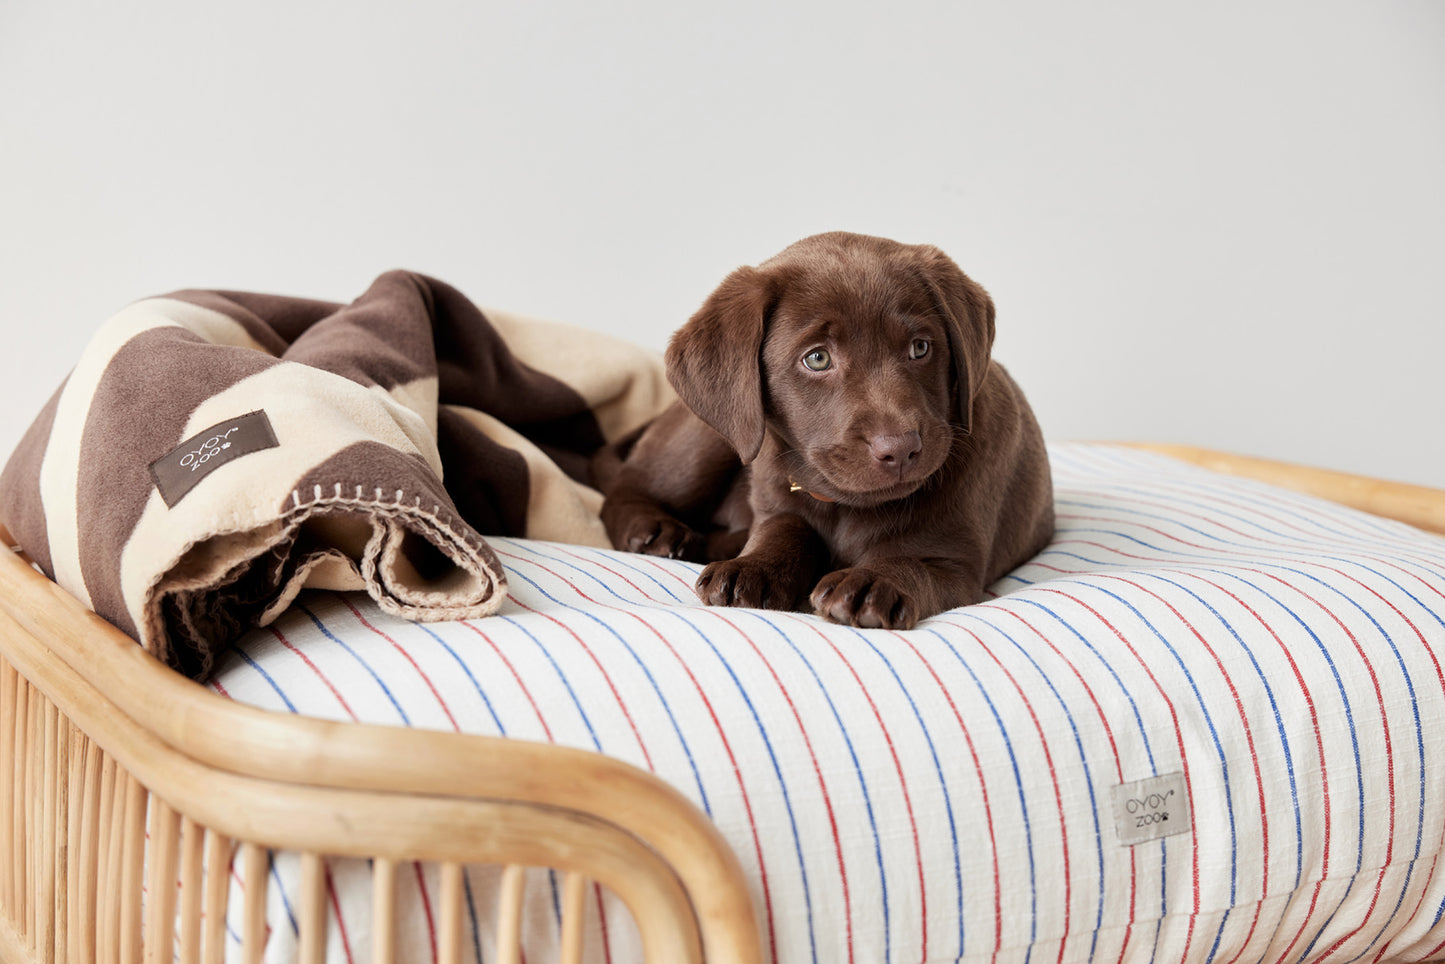 OYOY ZOO Otto Dog Bed - Medium Dog Bed